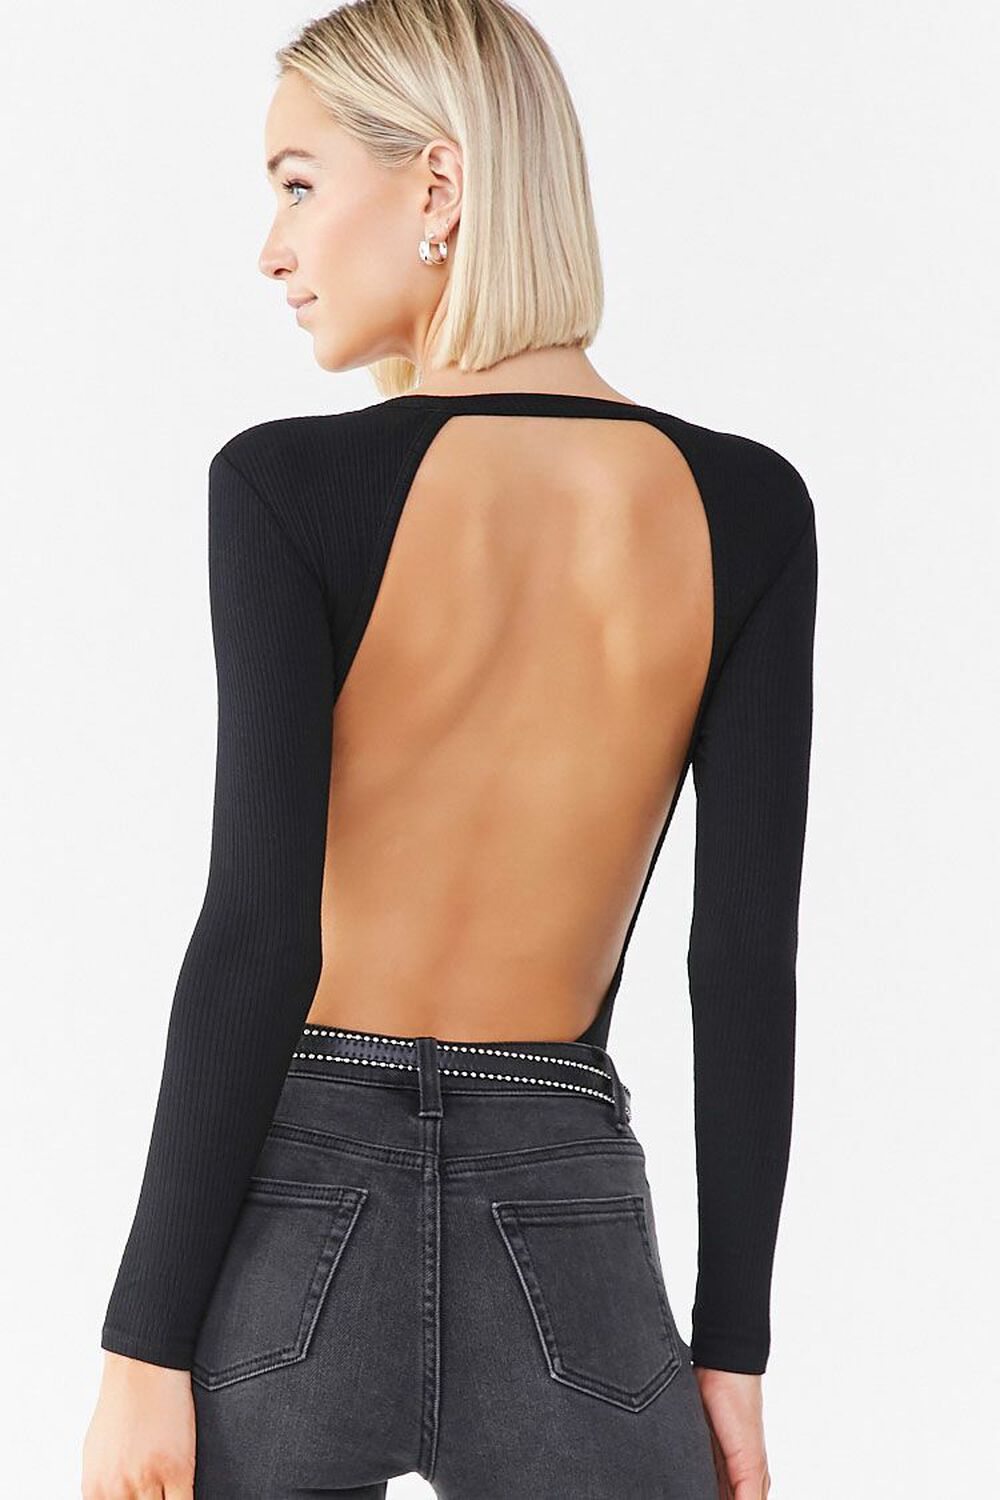 BLACK Ribbed Open-Back Bodysuit, image 3